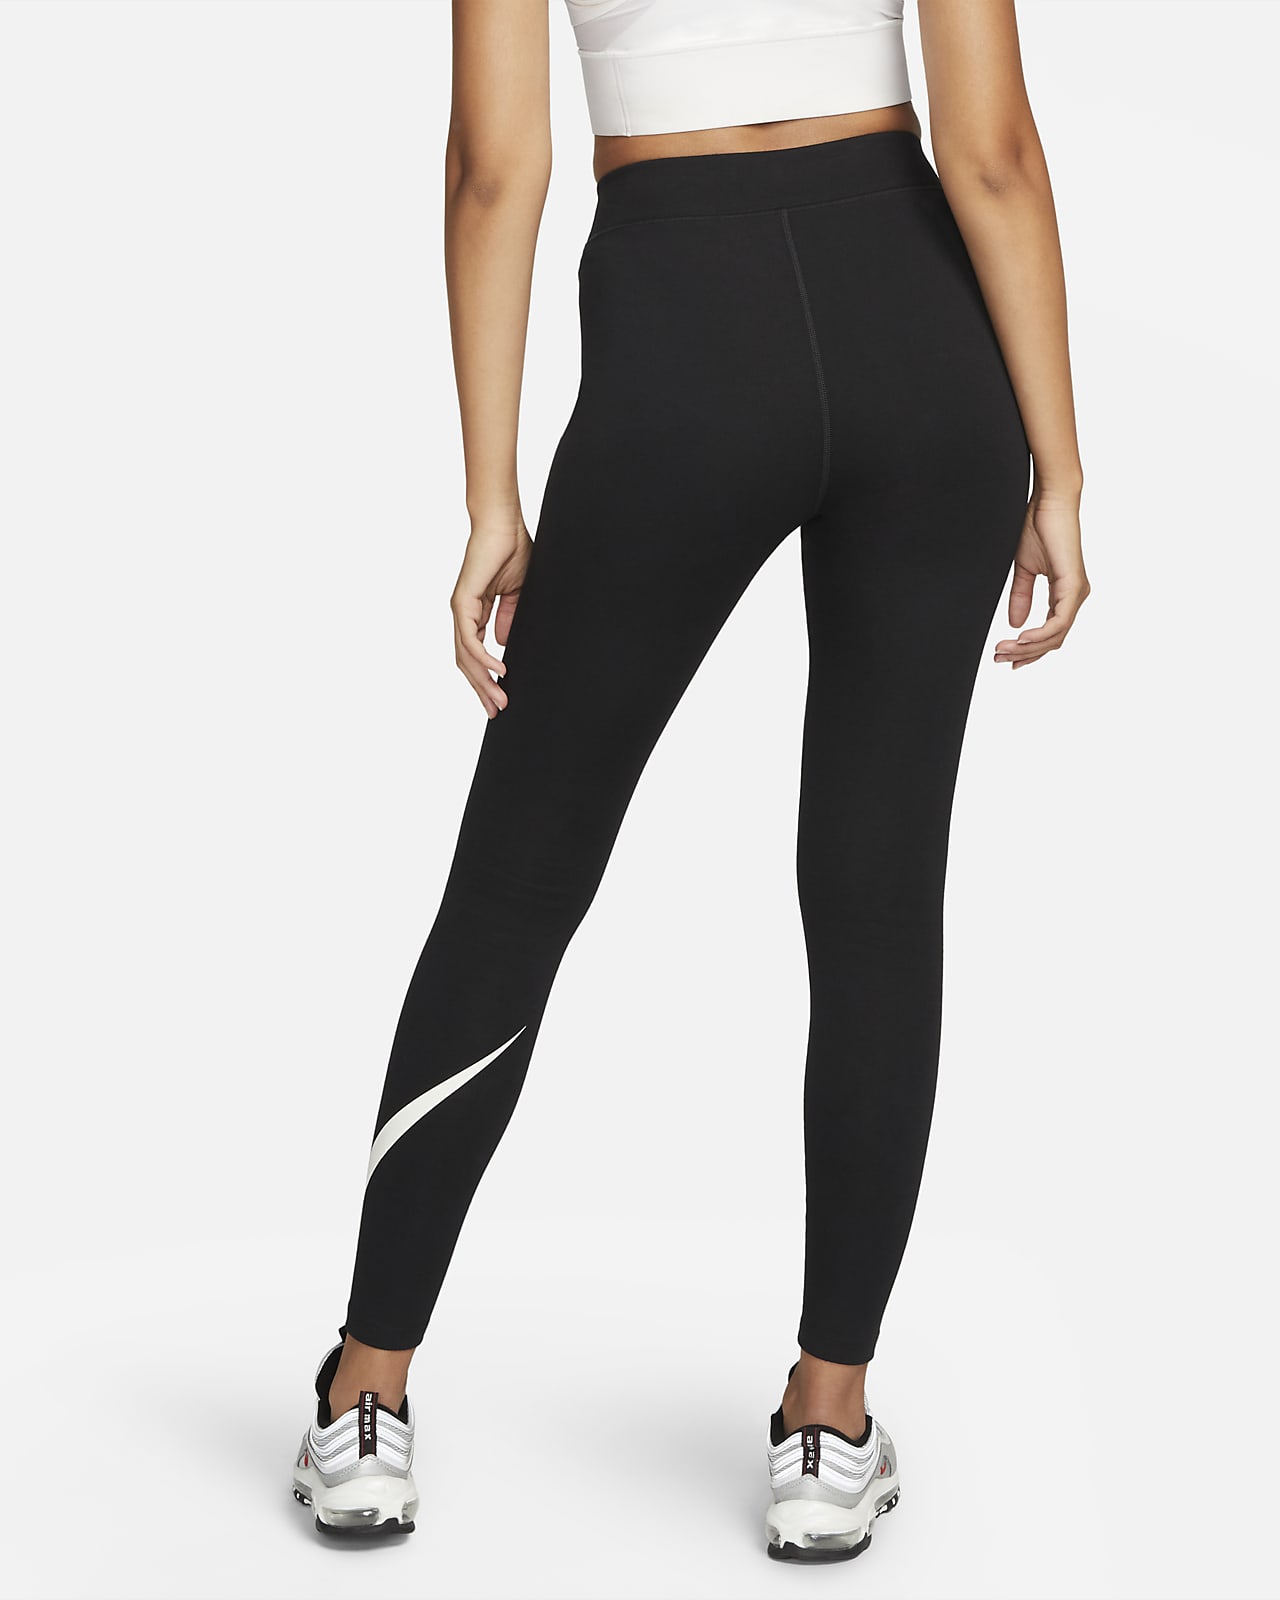 Nike Sportswear Classics legging met hoge taille en graphic voor dames